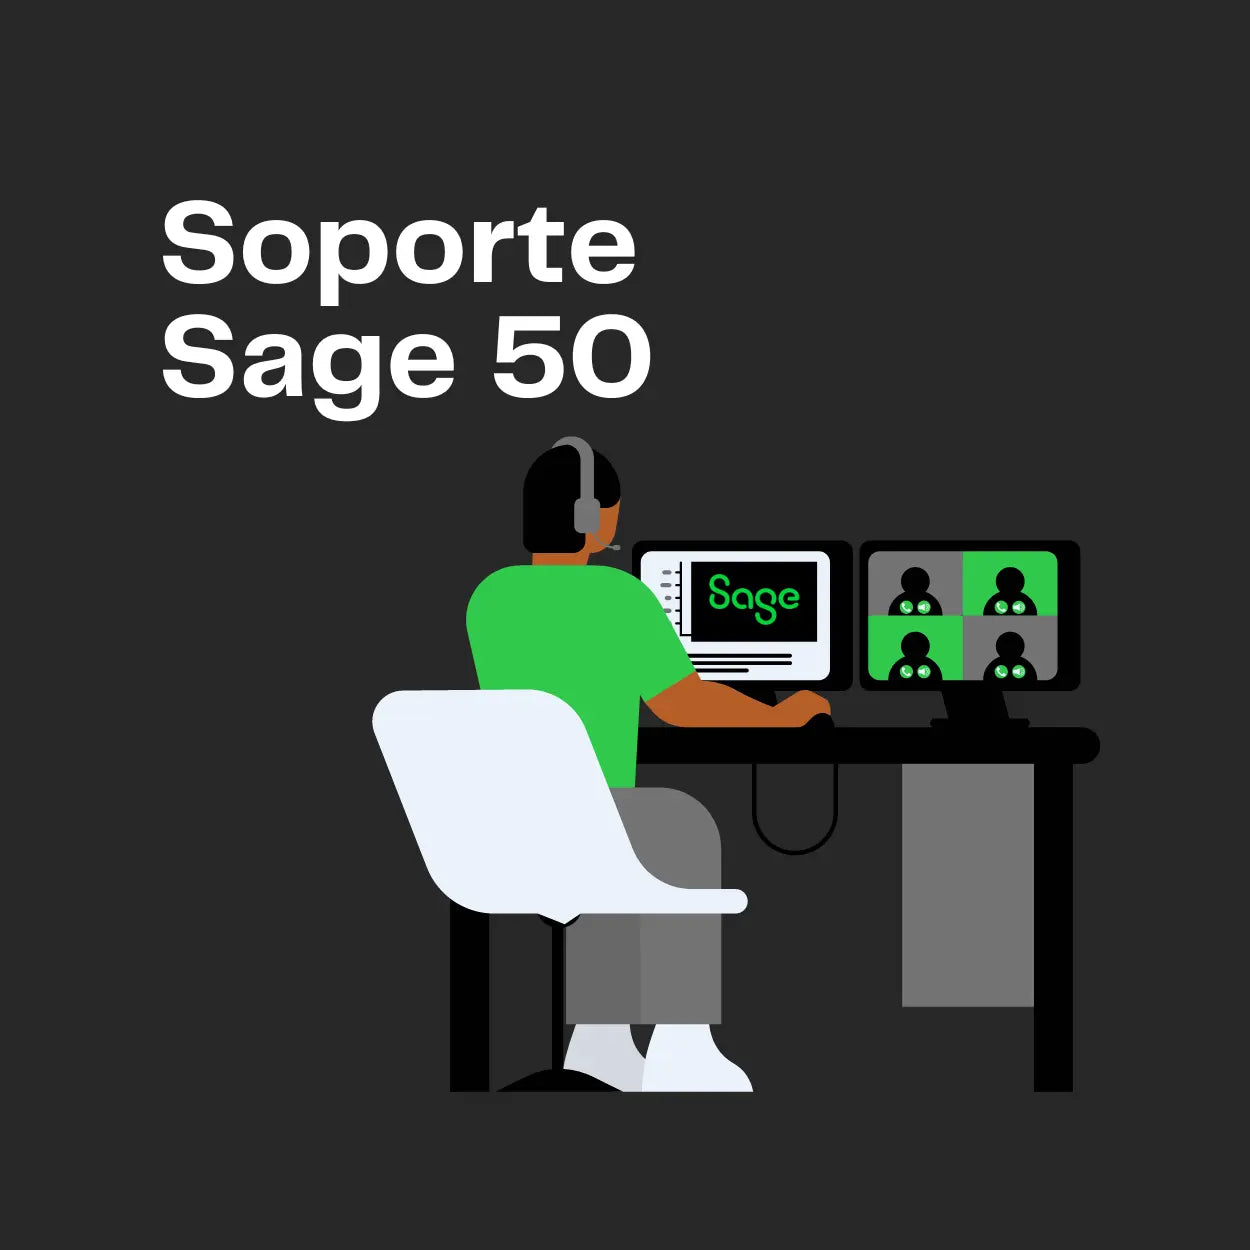 Soporte Sage 50 TKS TECHNOLOGY